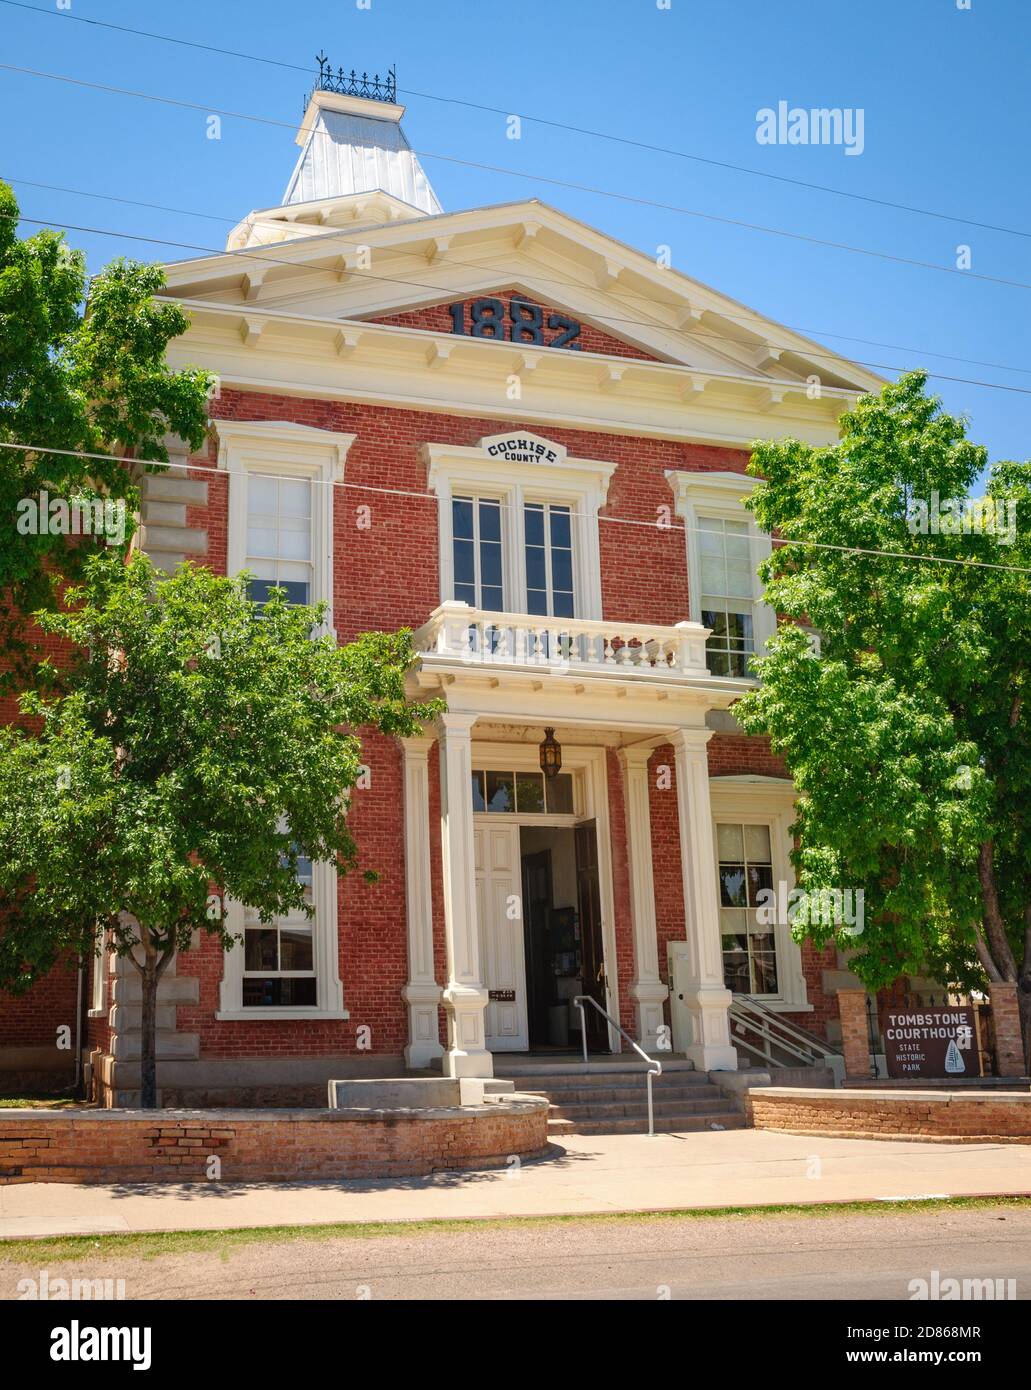 The historic town of Tombstone, Arizona Stock Photo